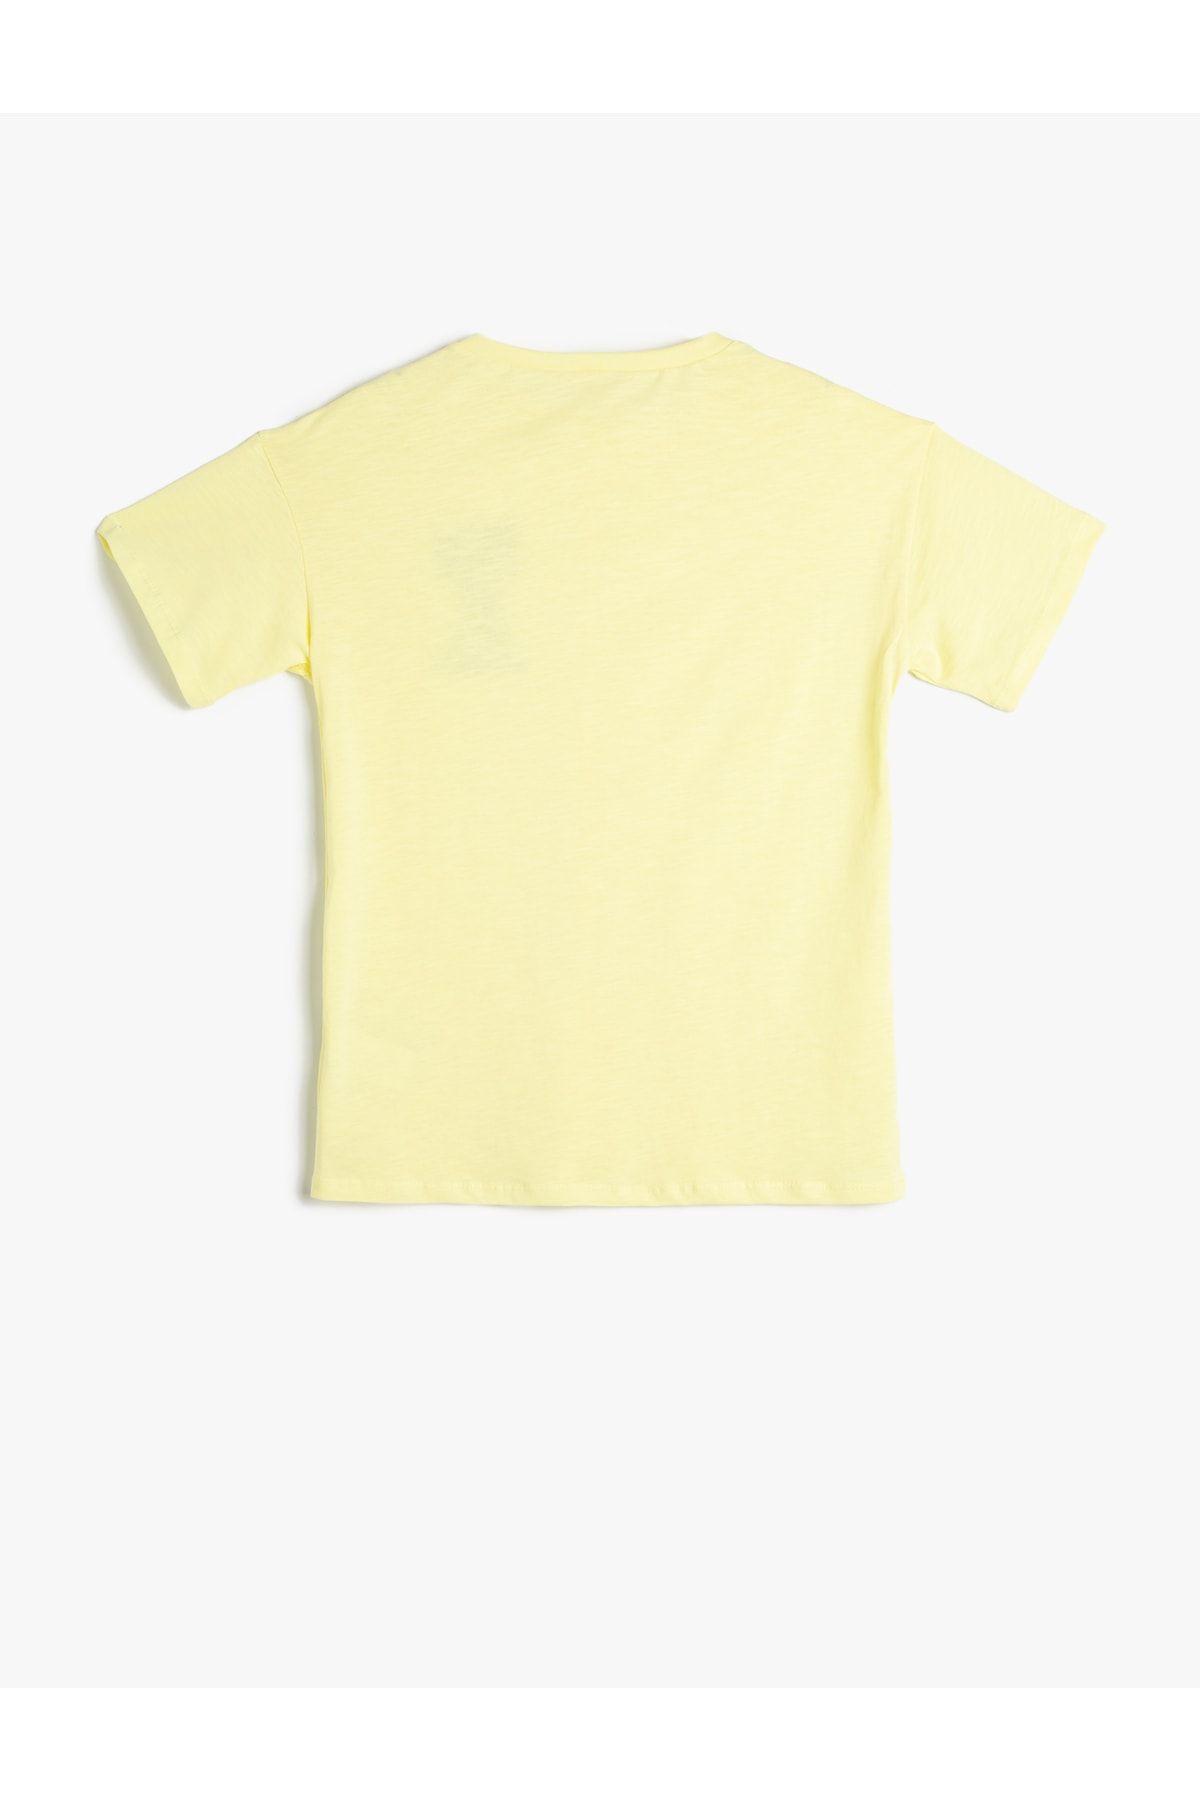 Koton تی شرت آستین کوتاه یقه خدمه چاپ با جزئیات پنبه